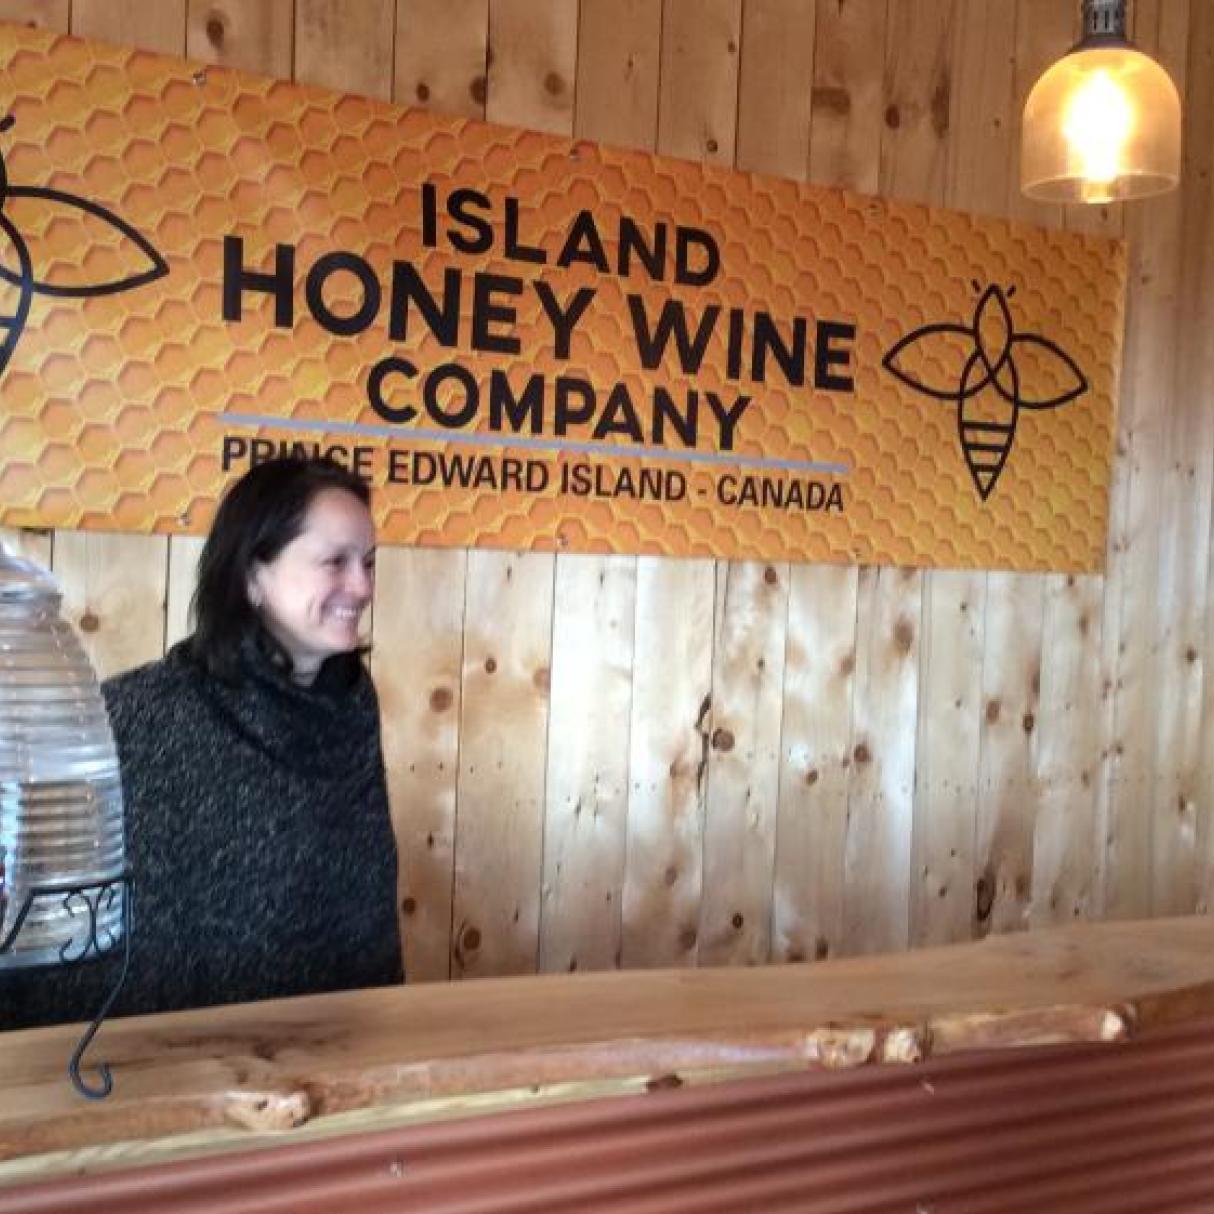 Inside the store of the Island Honey Wine Company